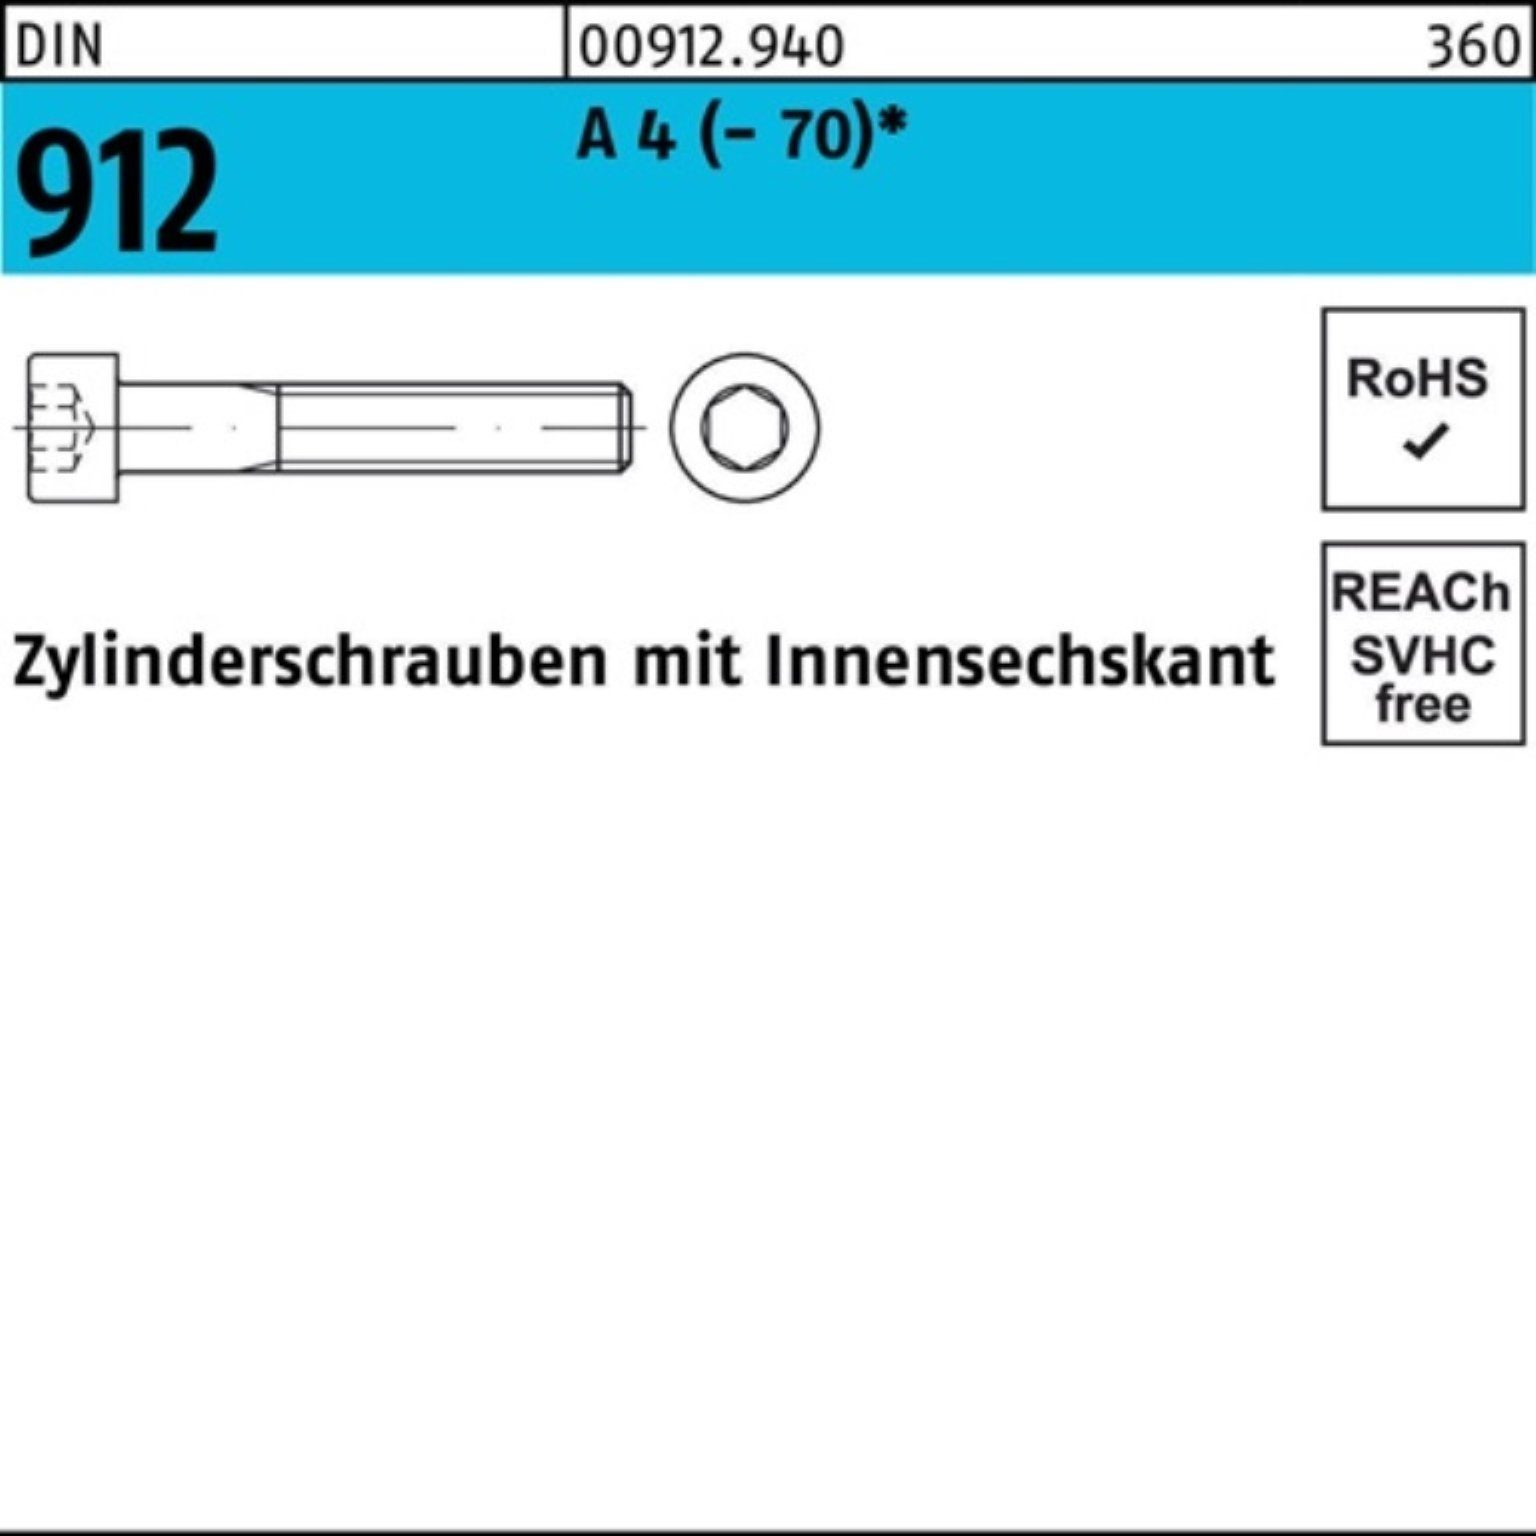 Offizieller Vertreter Reyher Zylinderschraube 100er Pack Zylinderschraube 912 DIN M24x A St Innen-6kt 110 4 1 (70)